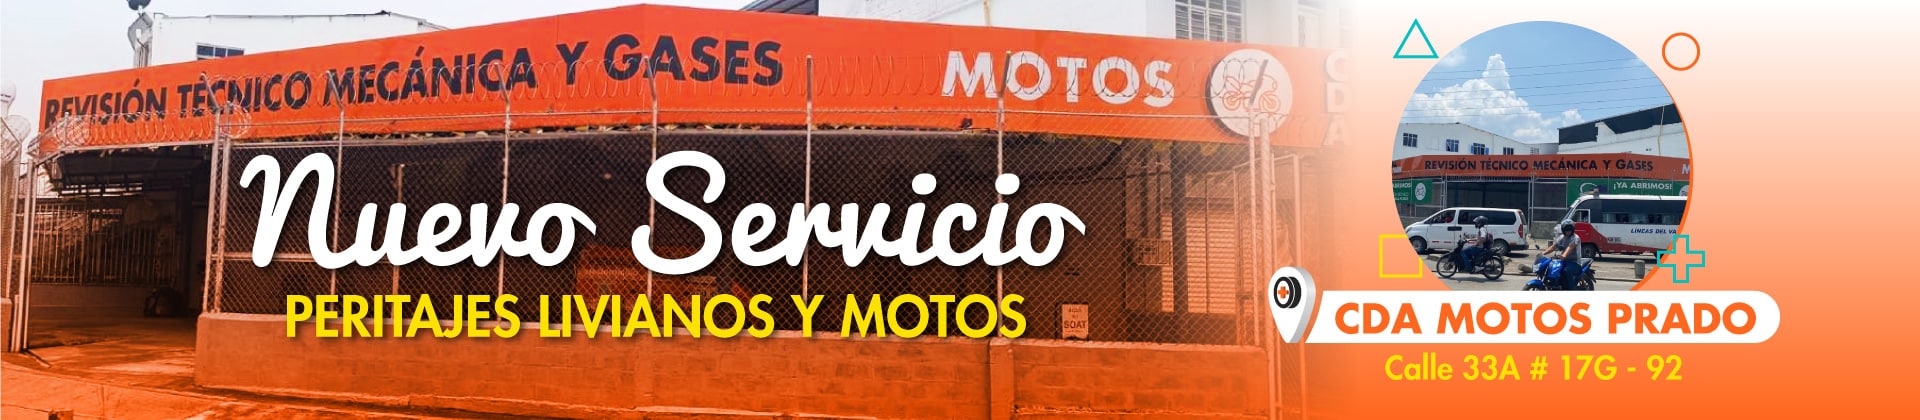 banner CDA Moto Prado